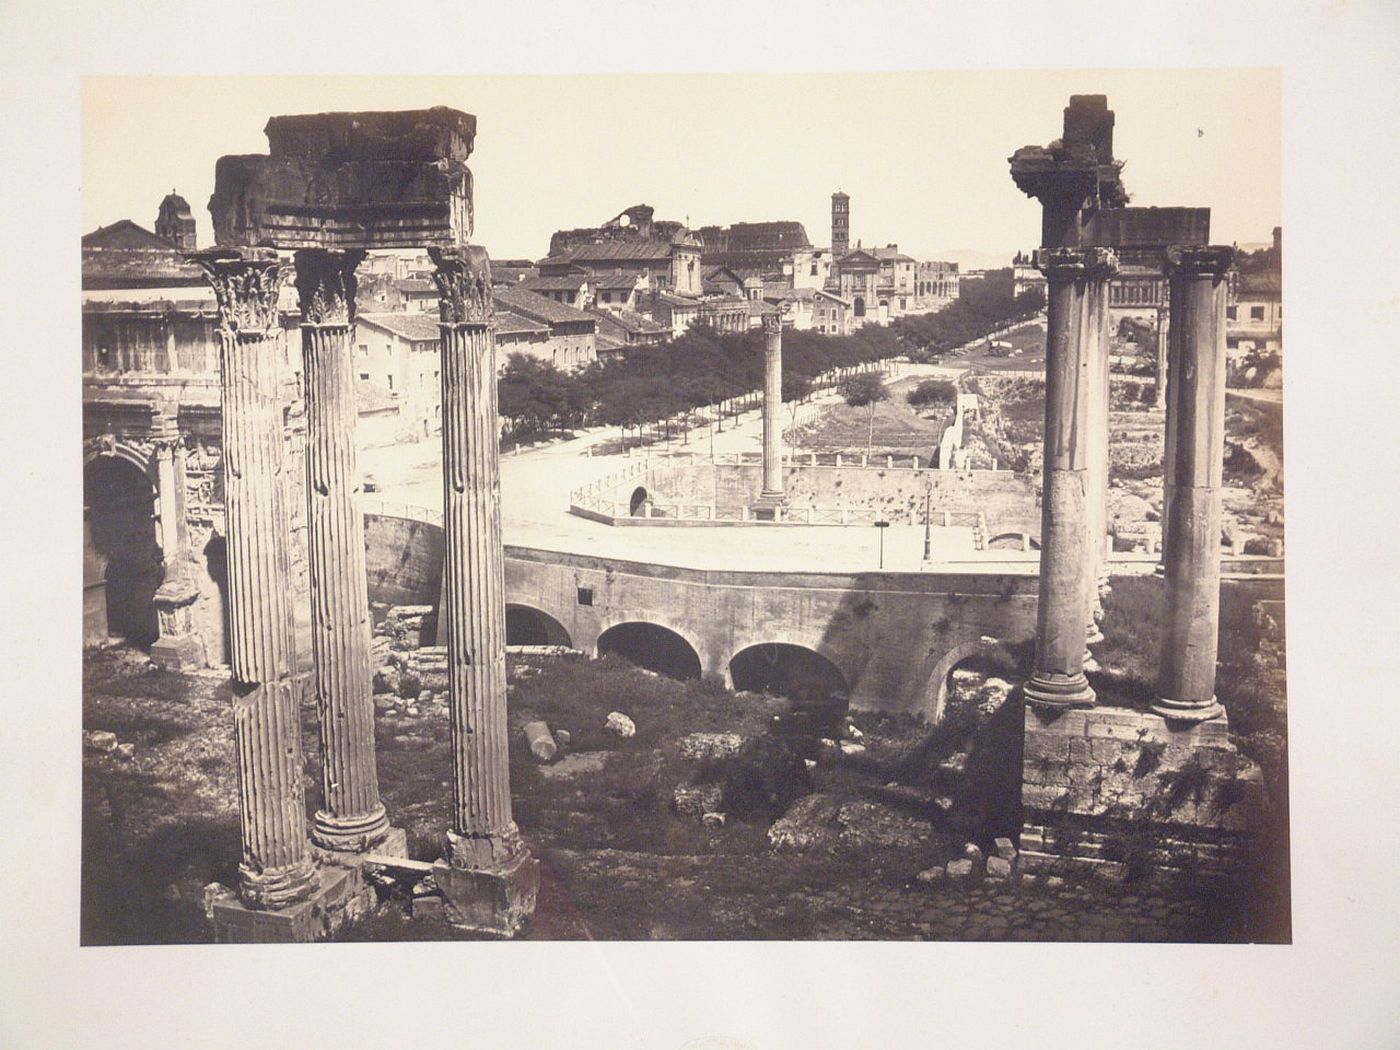 View of the Roman Forum with the Tempio di Vespasiano, the Tempio di Saturno, the Column of Phocas, and the Arcus Septimii Severus, Rome, Italy